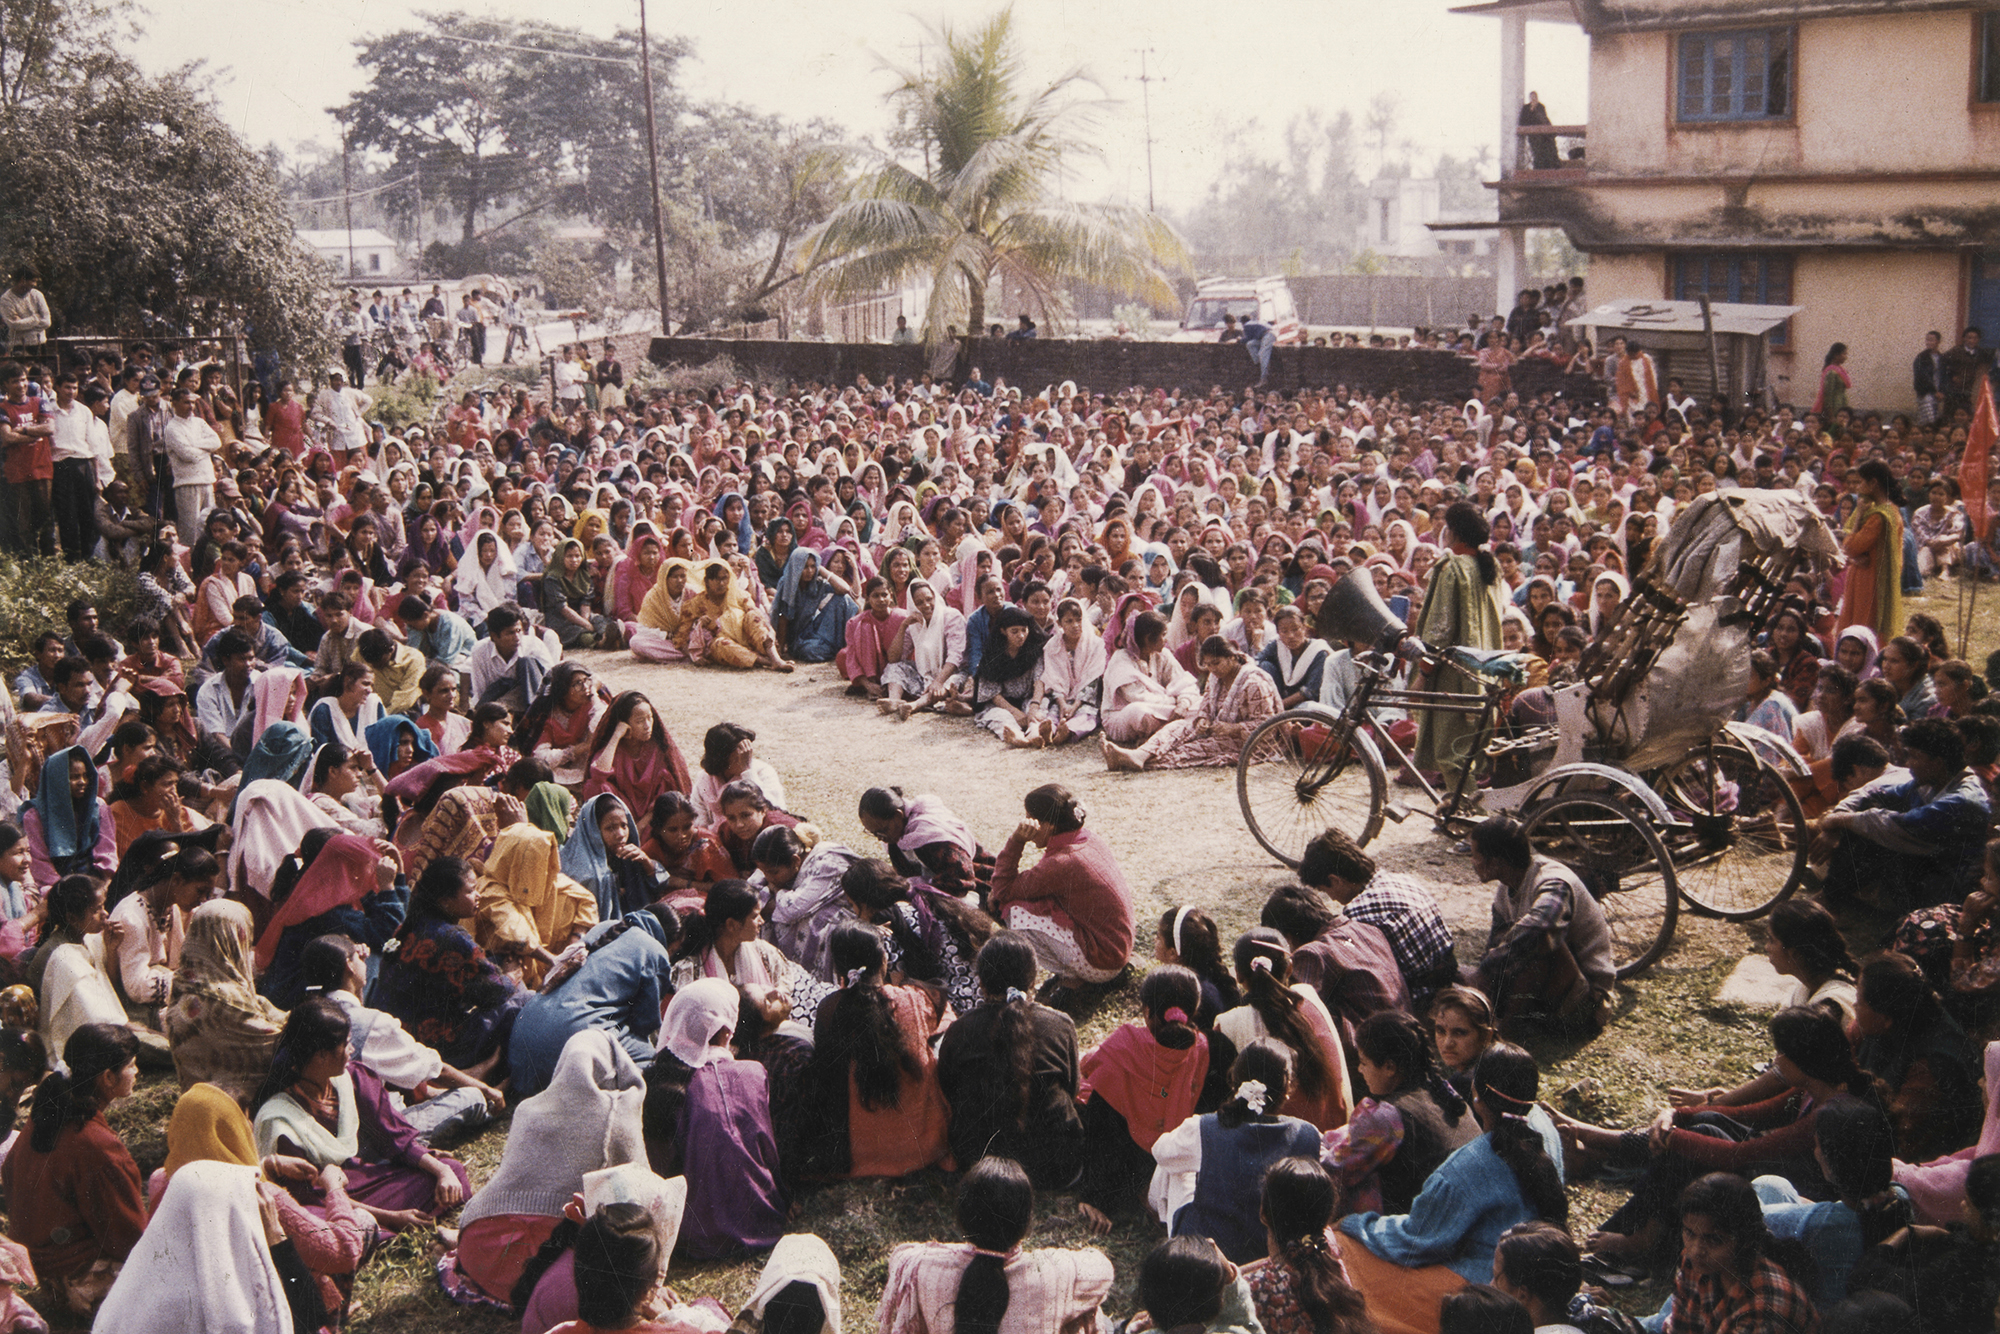 Kanchanpur | 2010
A mass meeting of former kamaiyas (bonded laborers) in Kanchanpur.